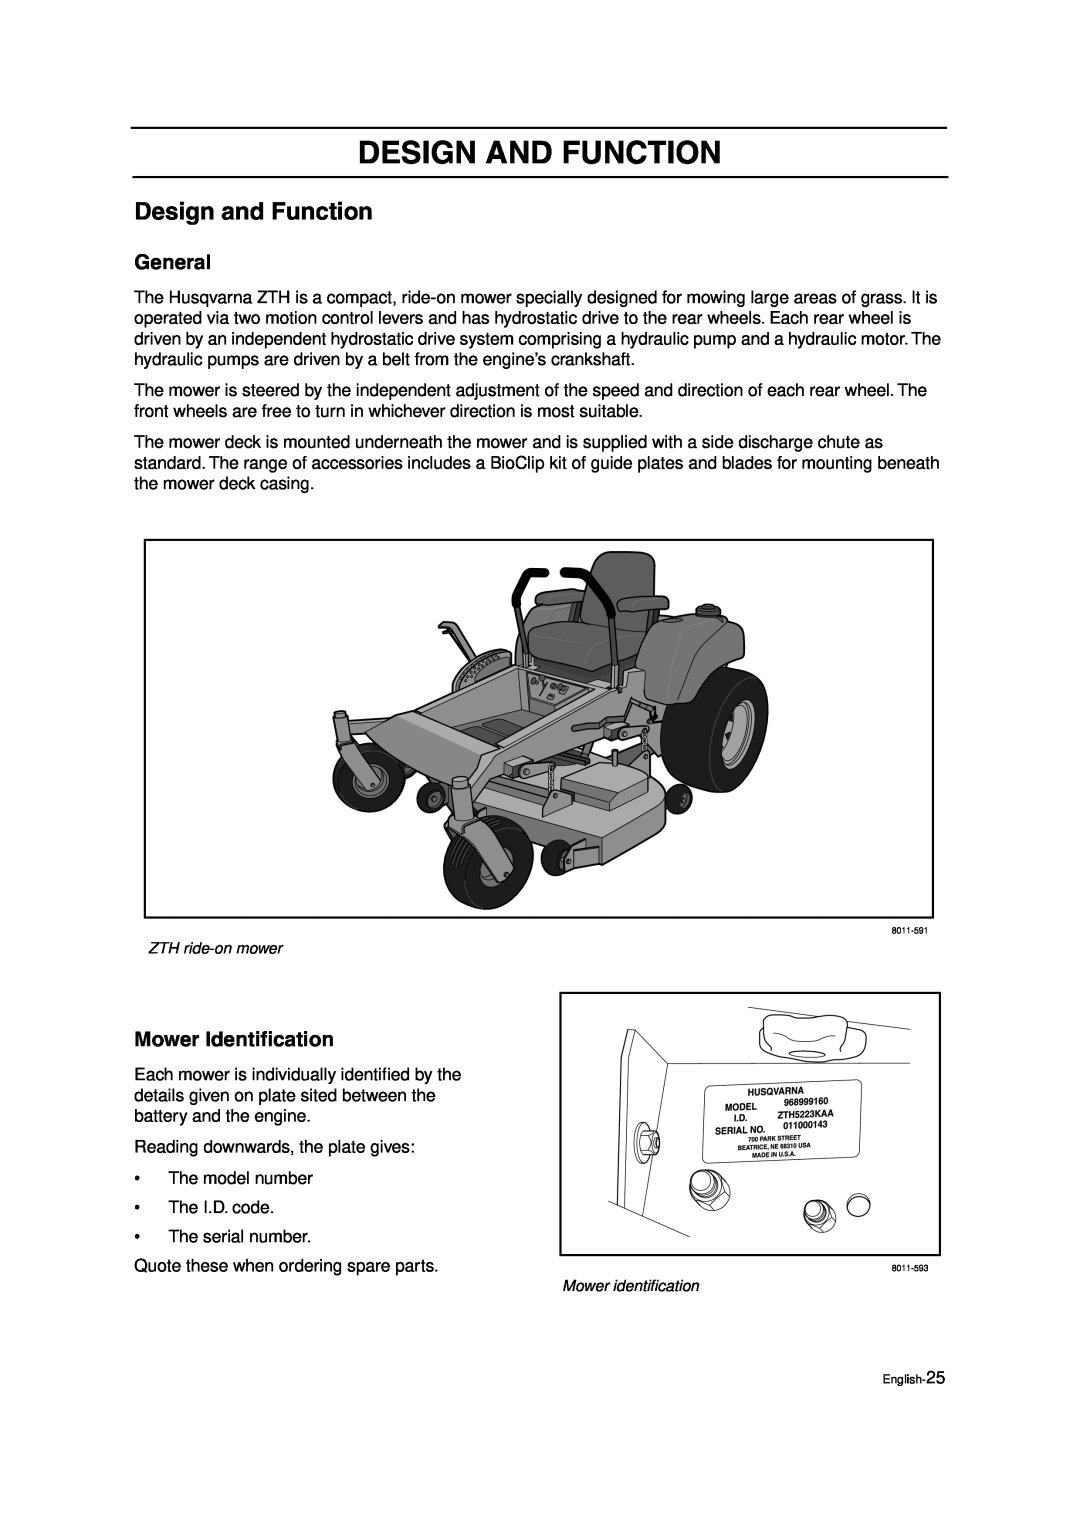 Husqvarna ZTH5223, ZTH6125 manual Design And Function, Design and Function, General, Mower Identiﬁcation 